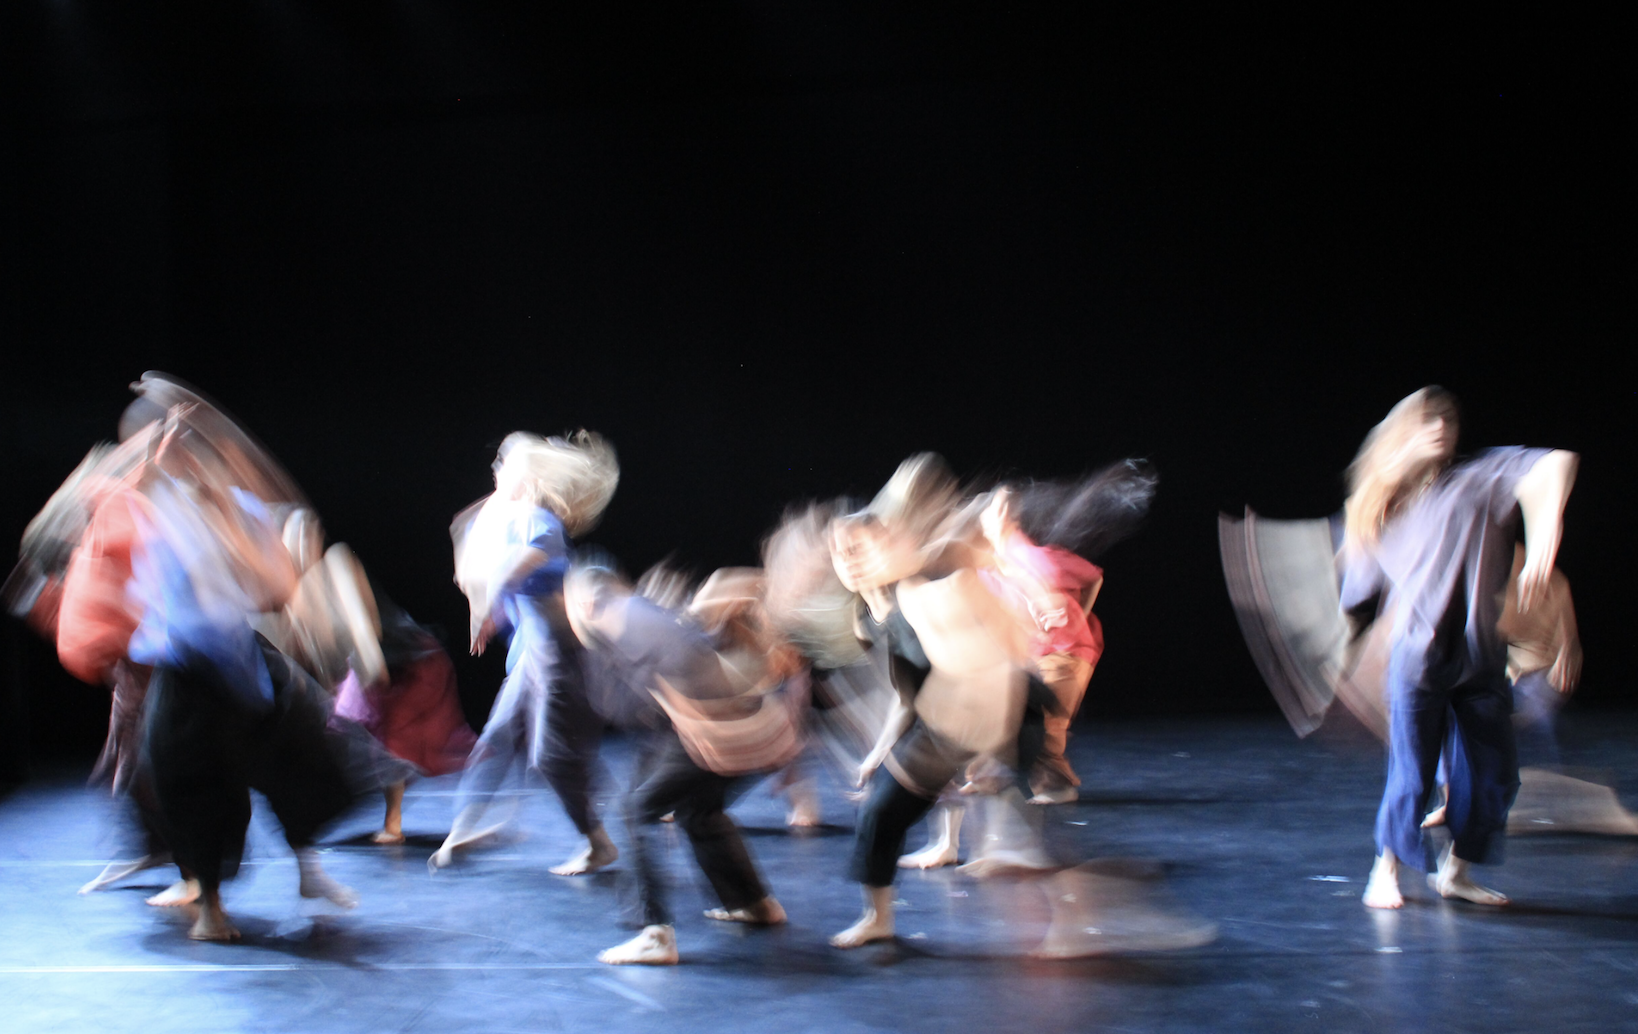 Schadenfreude: Dancing in Debt Choreographed by Aaron Samuel Davis, photos by Sam Spence.